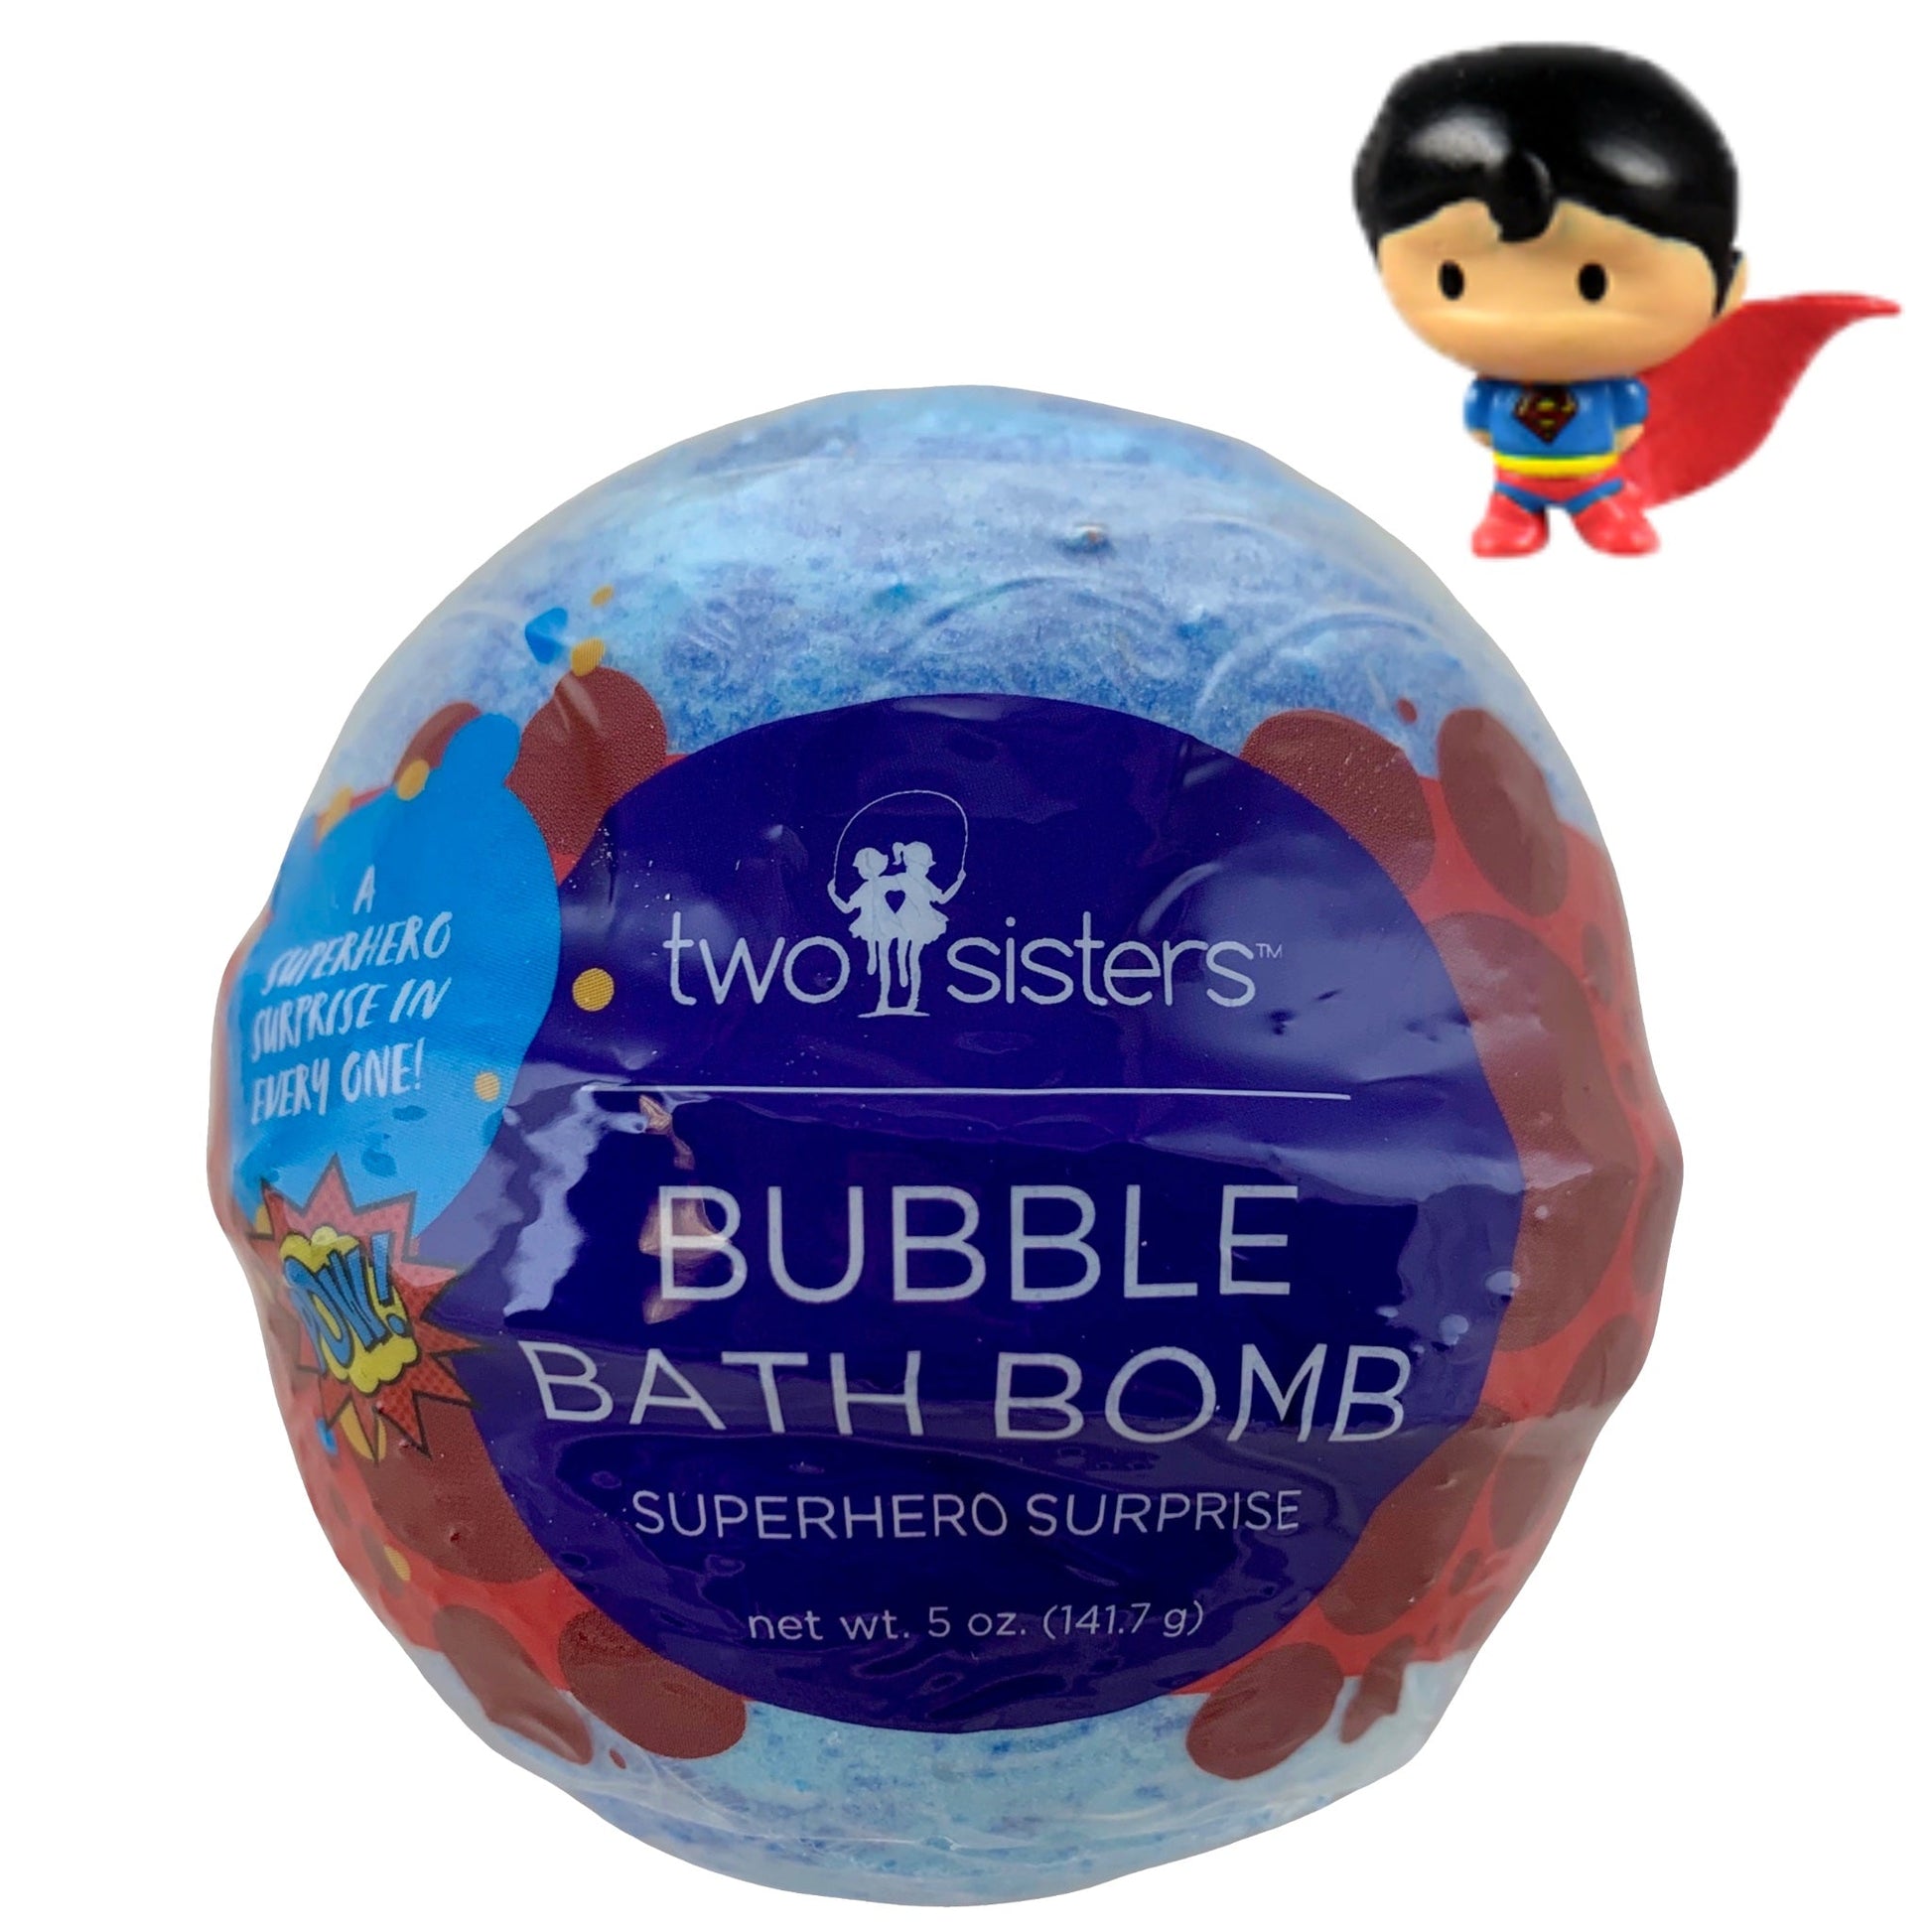 Superhero Surprise Bubble Bath Bomb - Gamescape